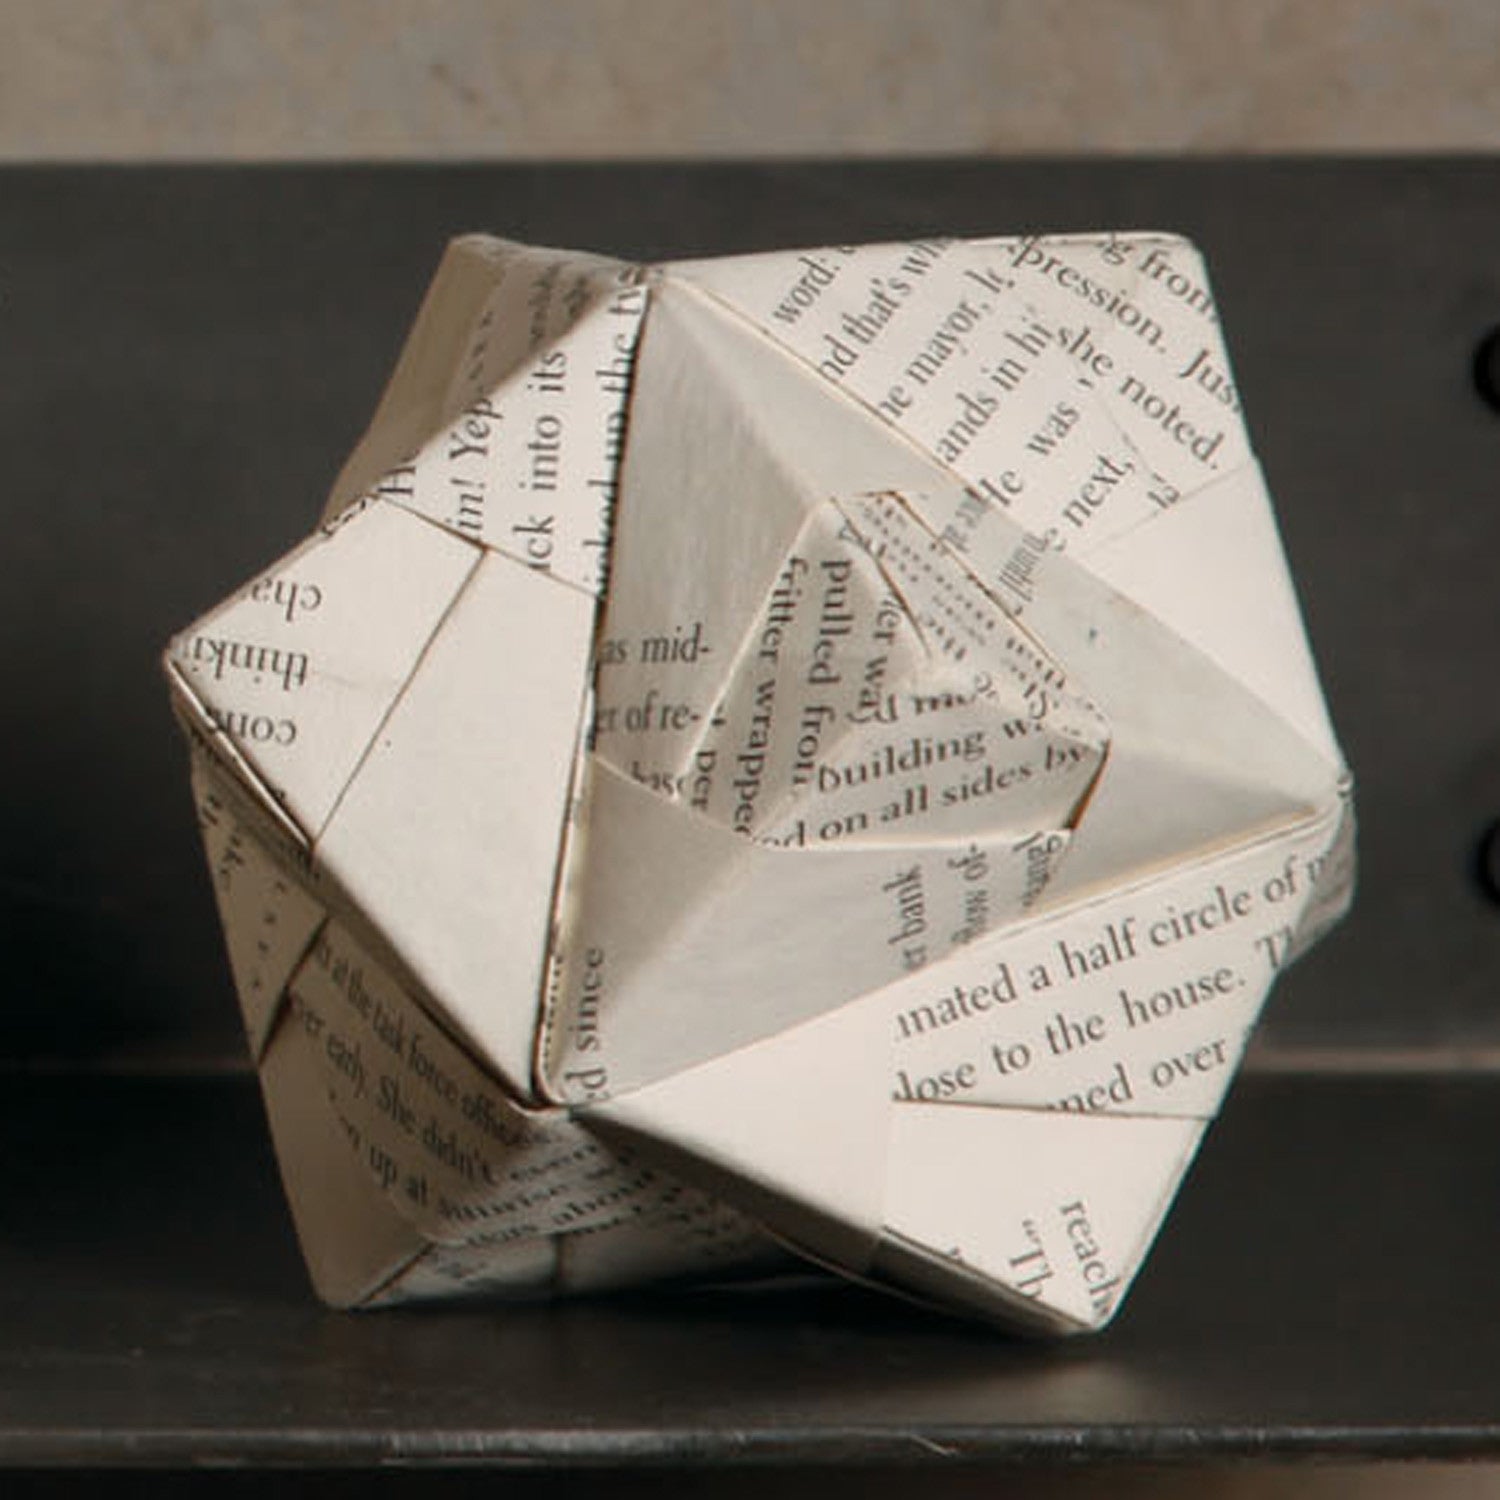 Origami Octahedron